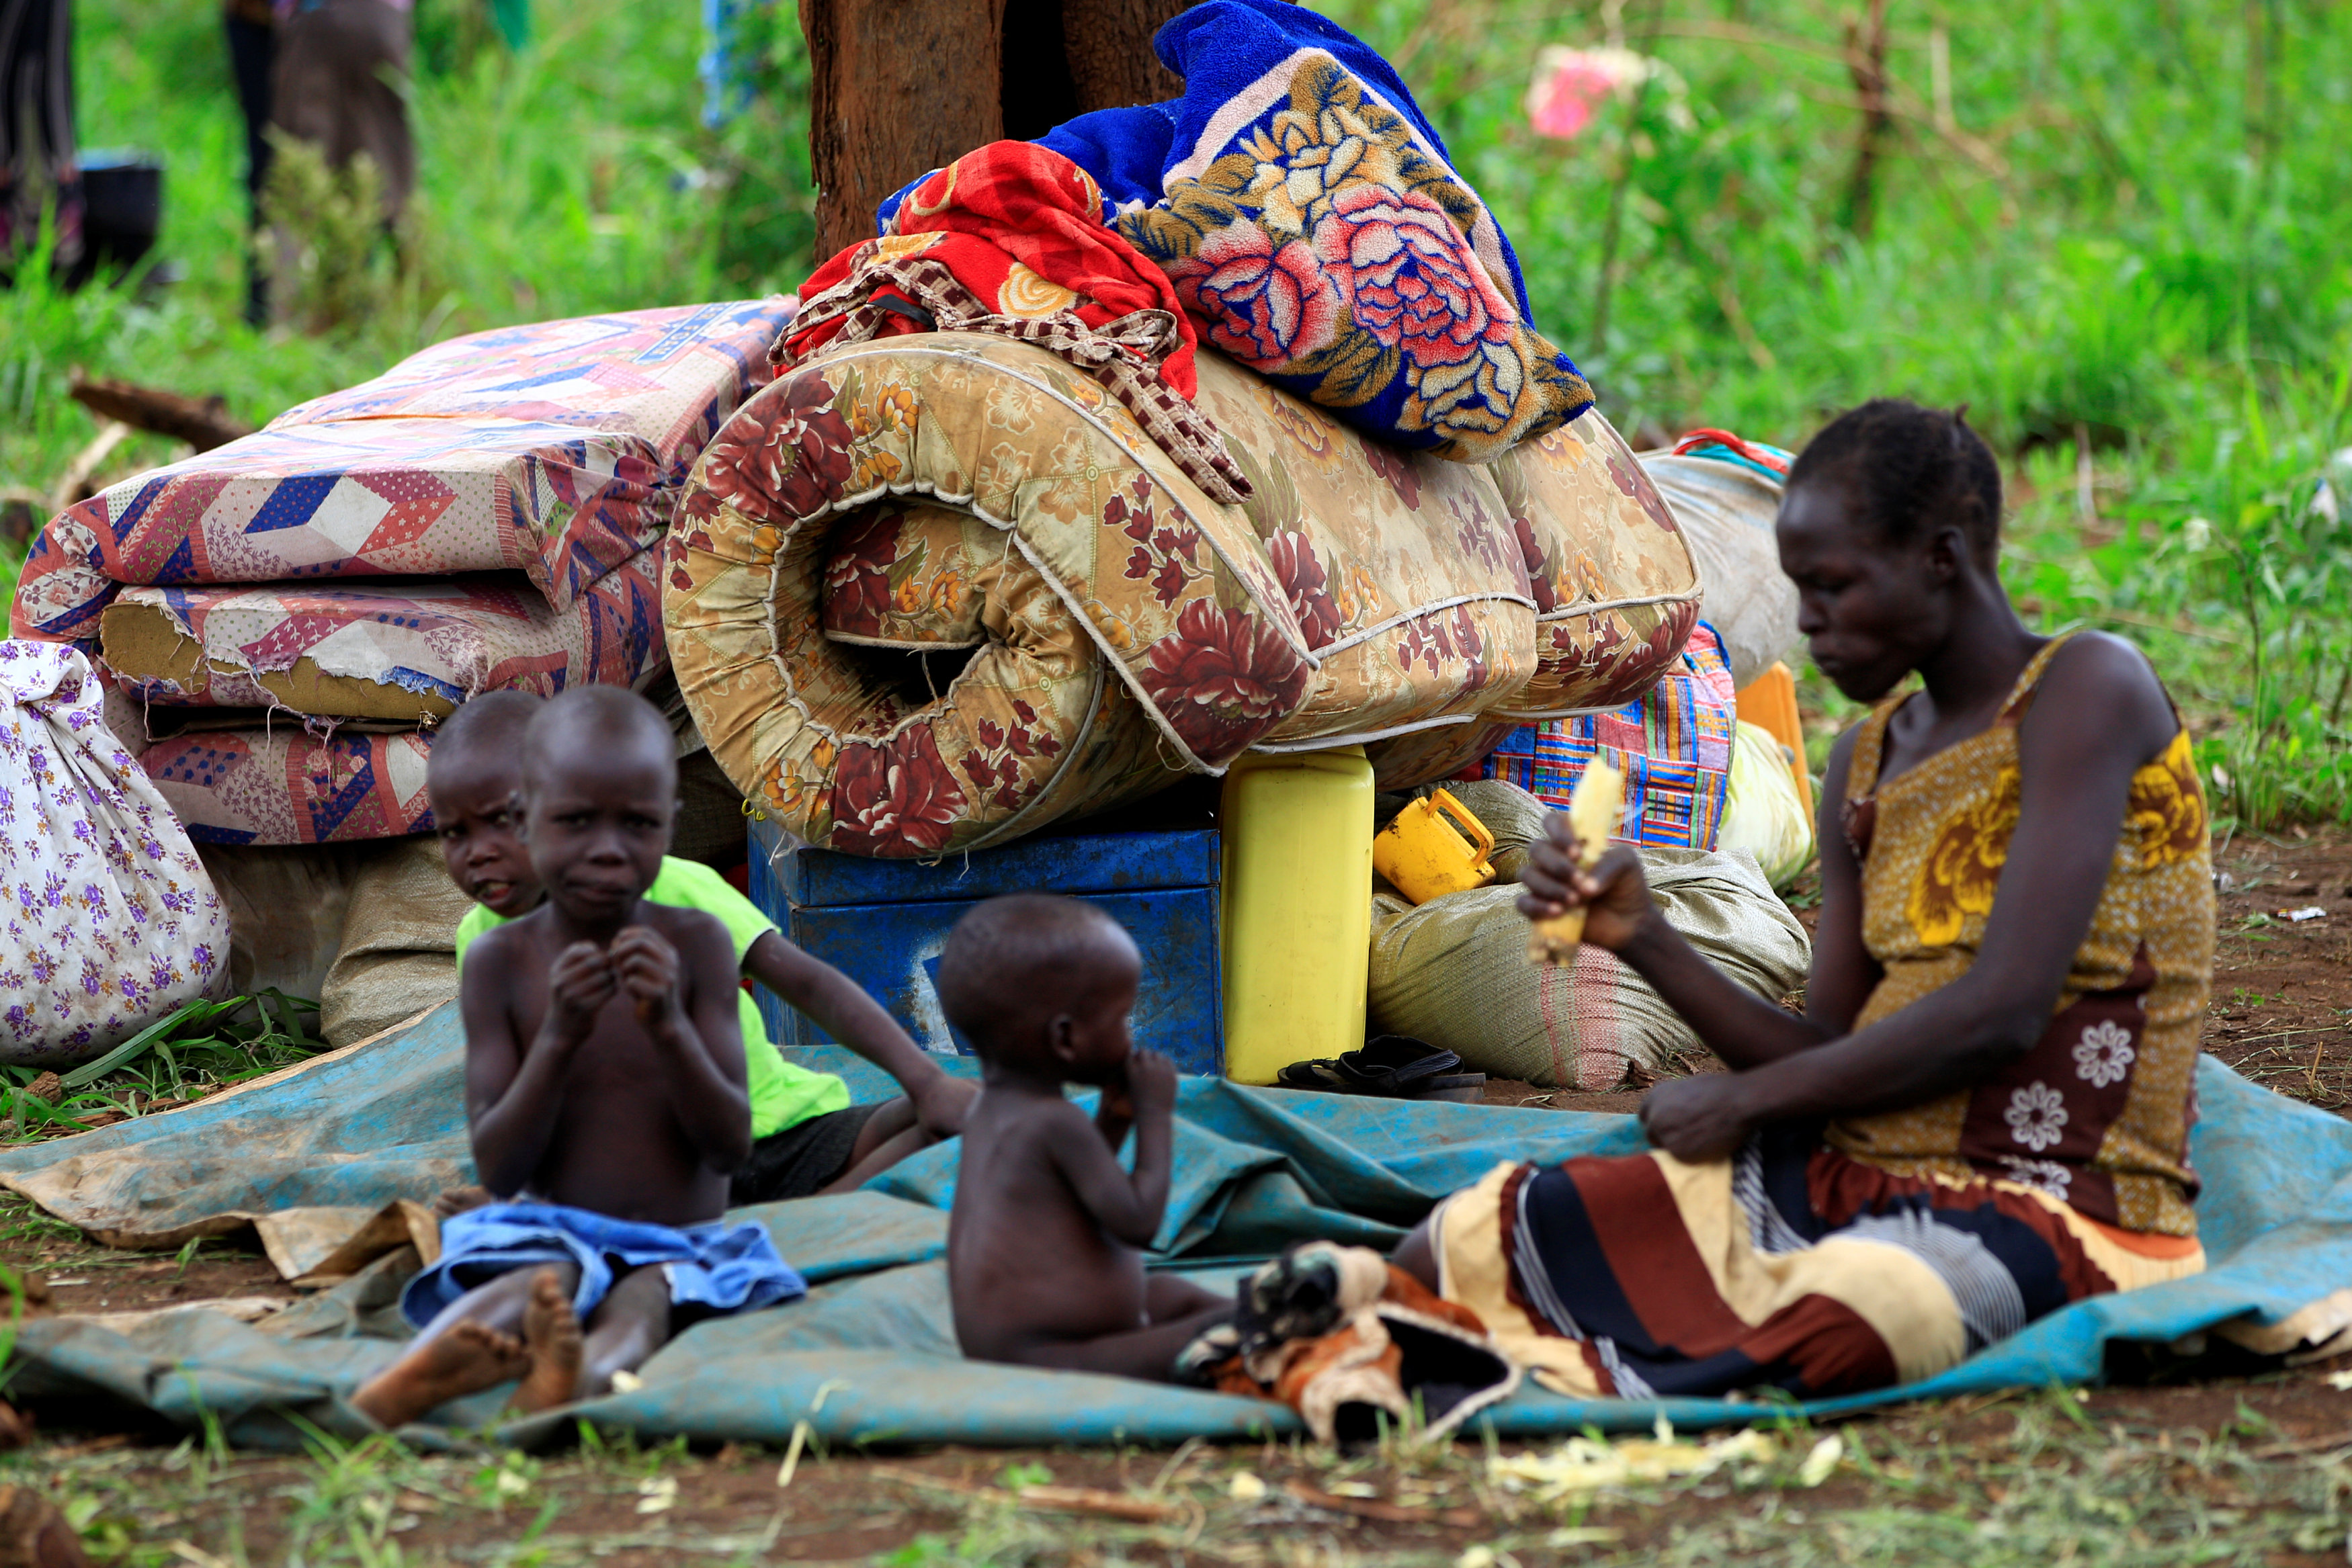 Militias raid South Sudan's Wau, killing at least 10, say witnesses